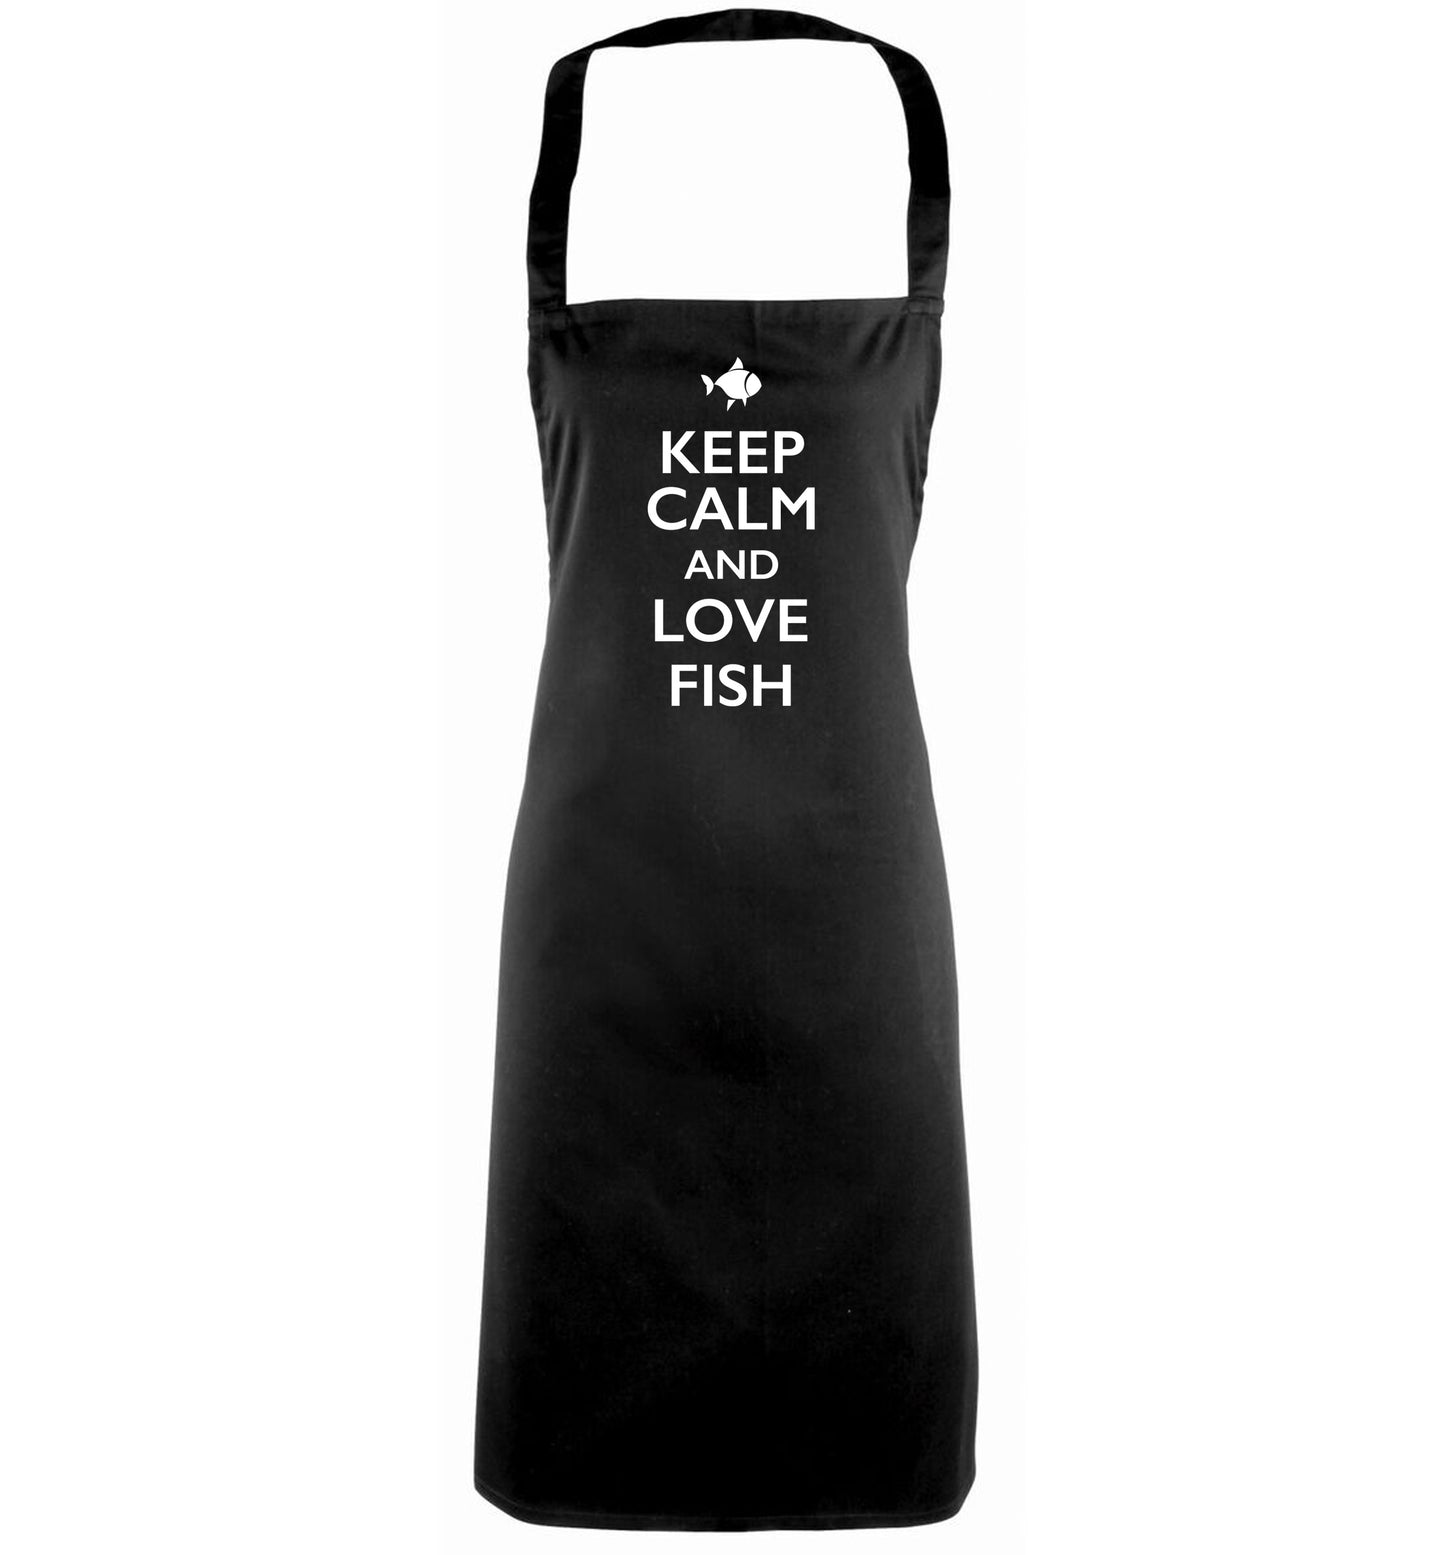 Keep calm and love fish black apron